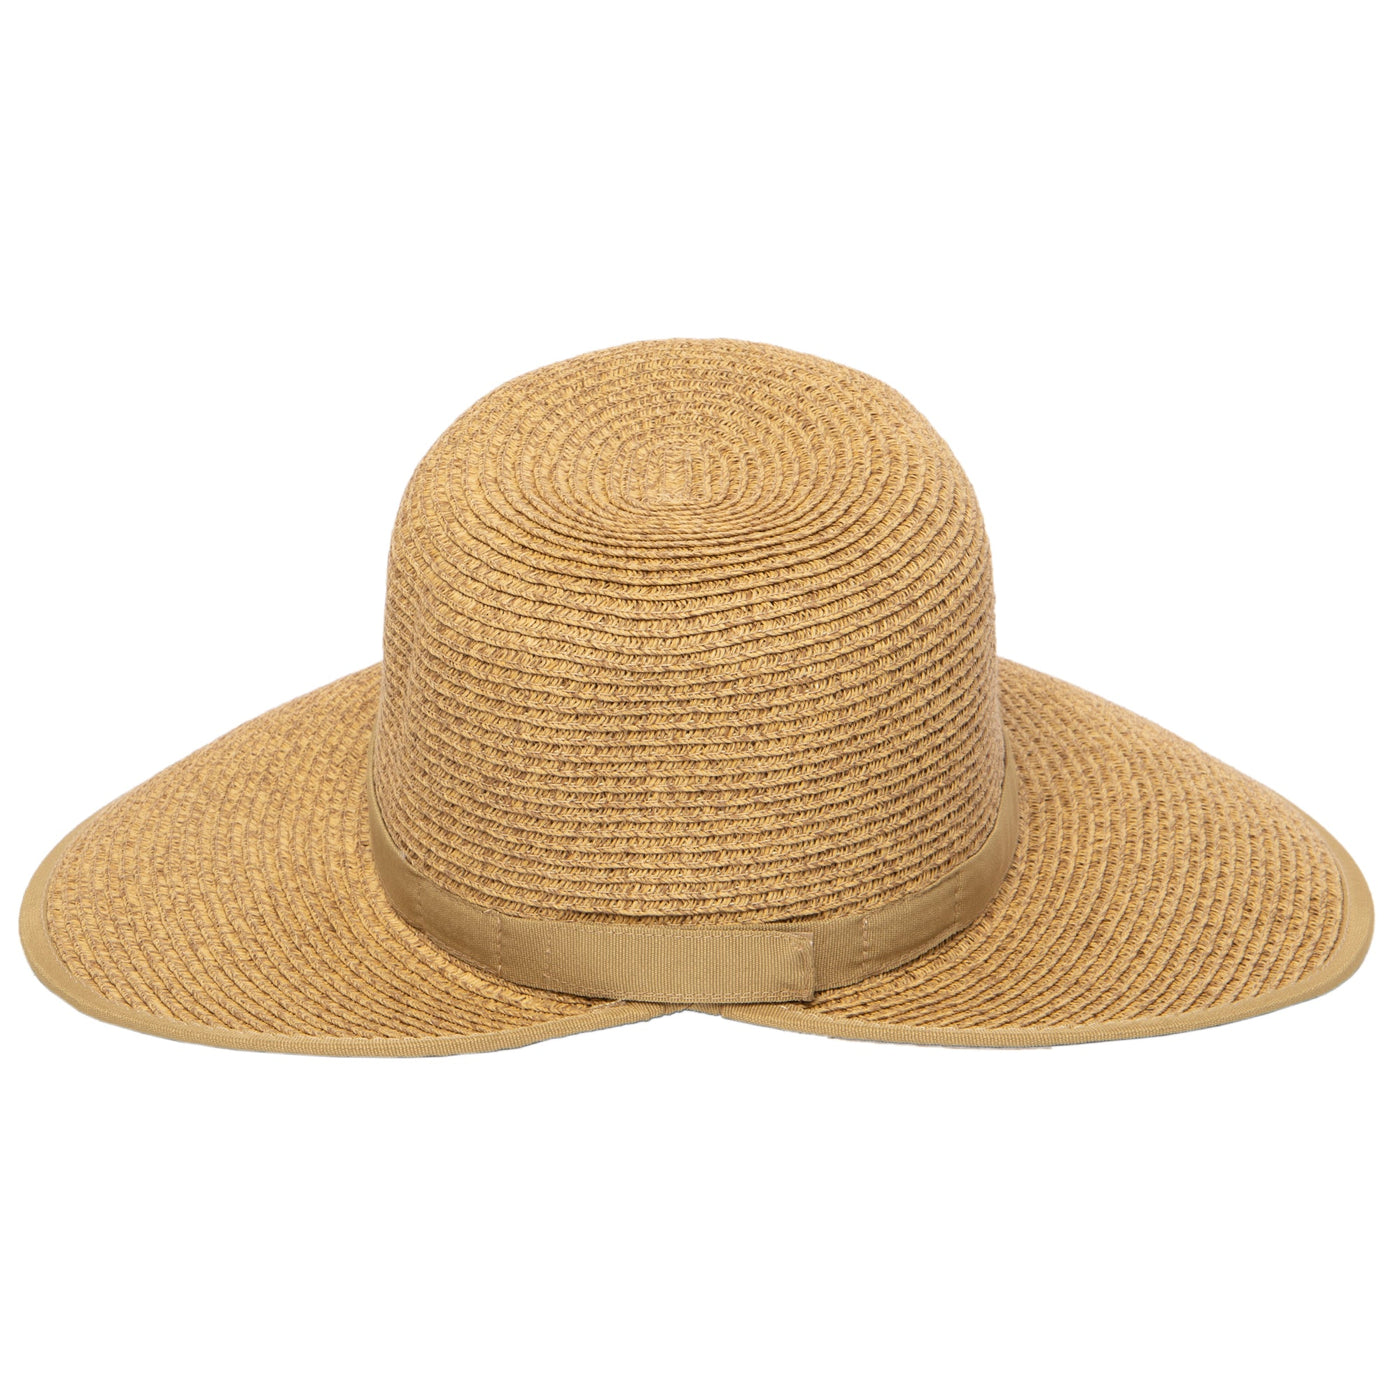 SUN BRIM - Women's Ultrabraid Round Crown Face Saver Sun Hat With Grosgrain Ribbon And Velcro Back Closure